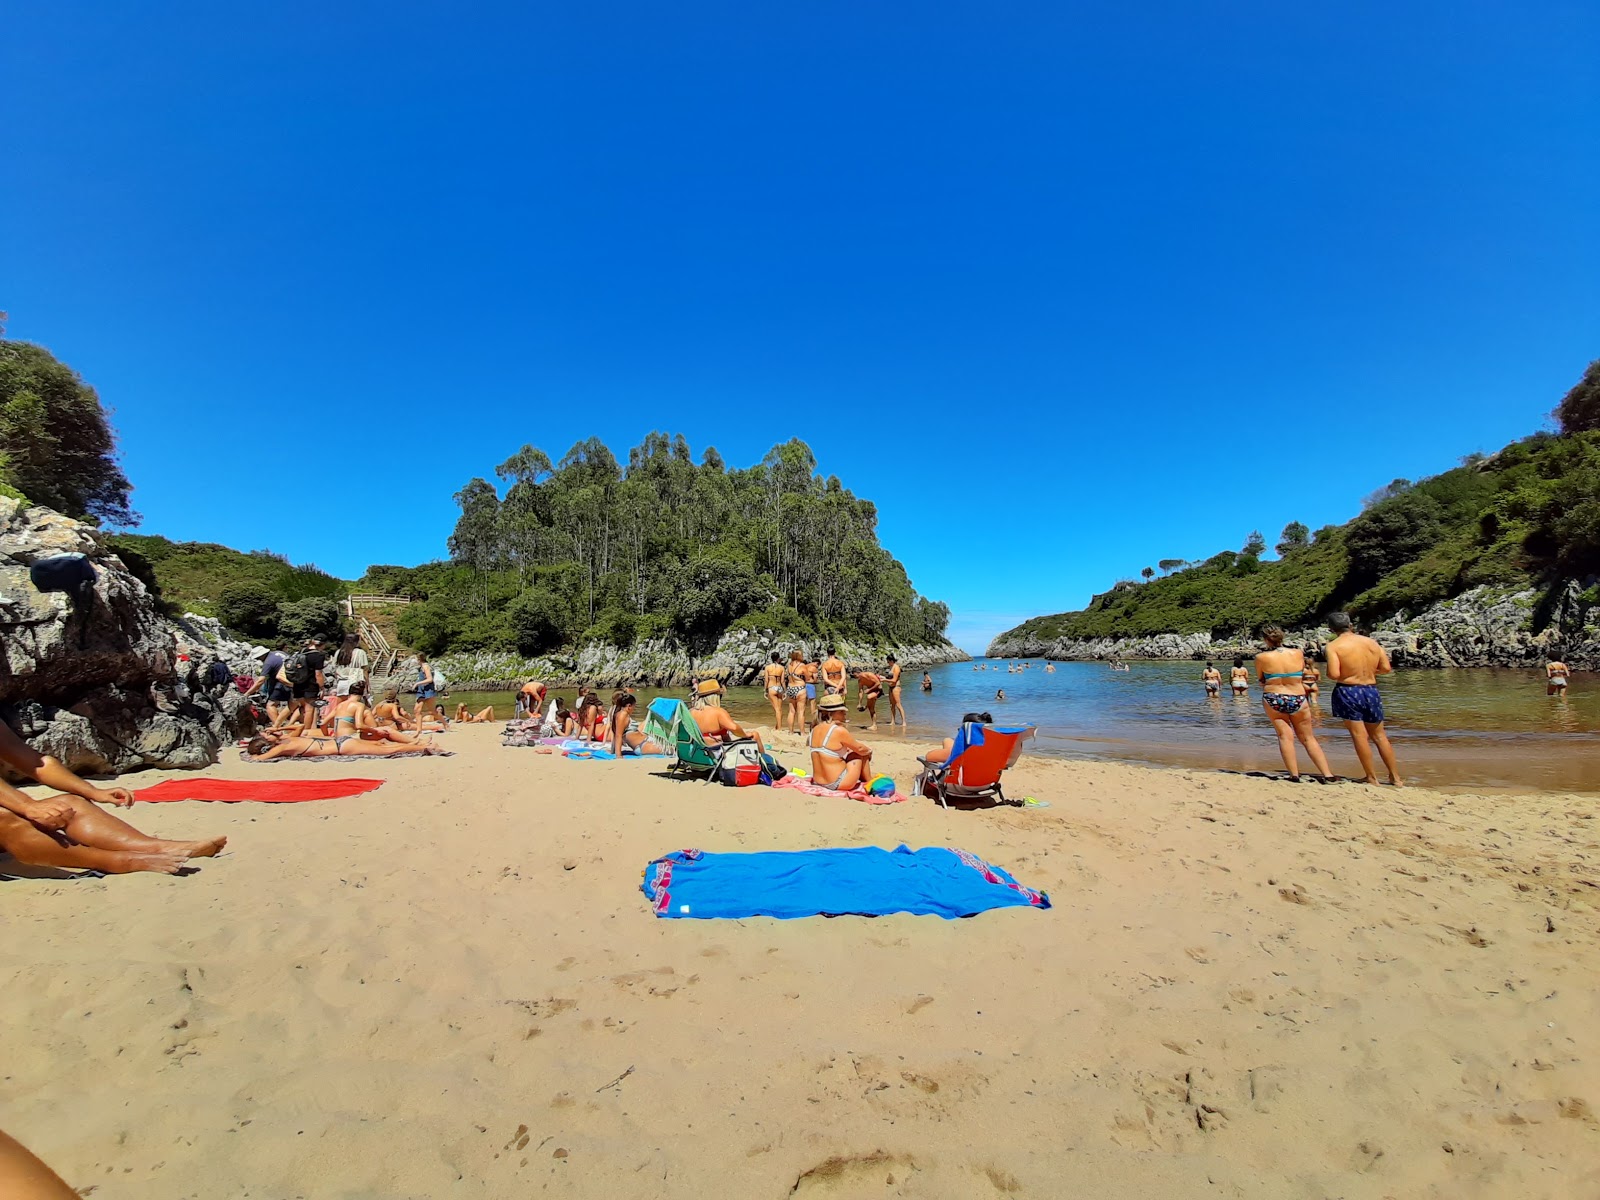 Foto di Playa de Guadamia con una superficie del sabbia luminosa